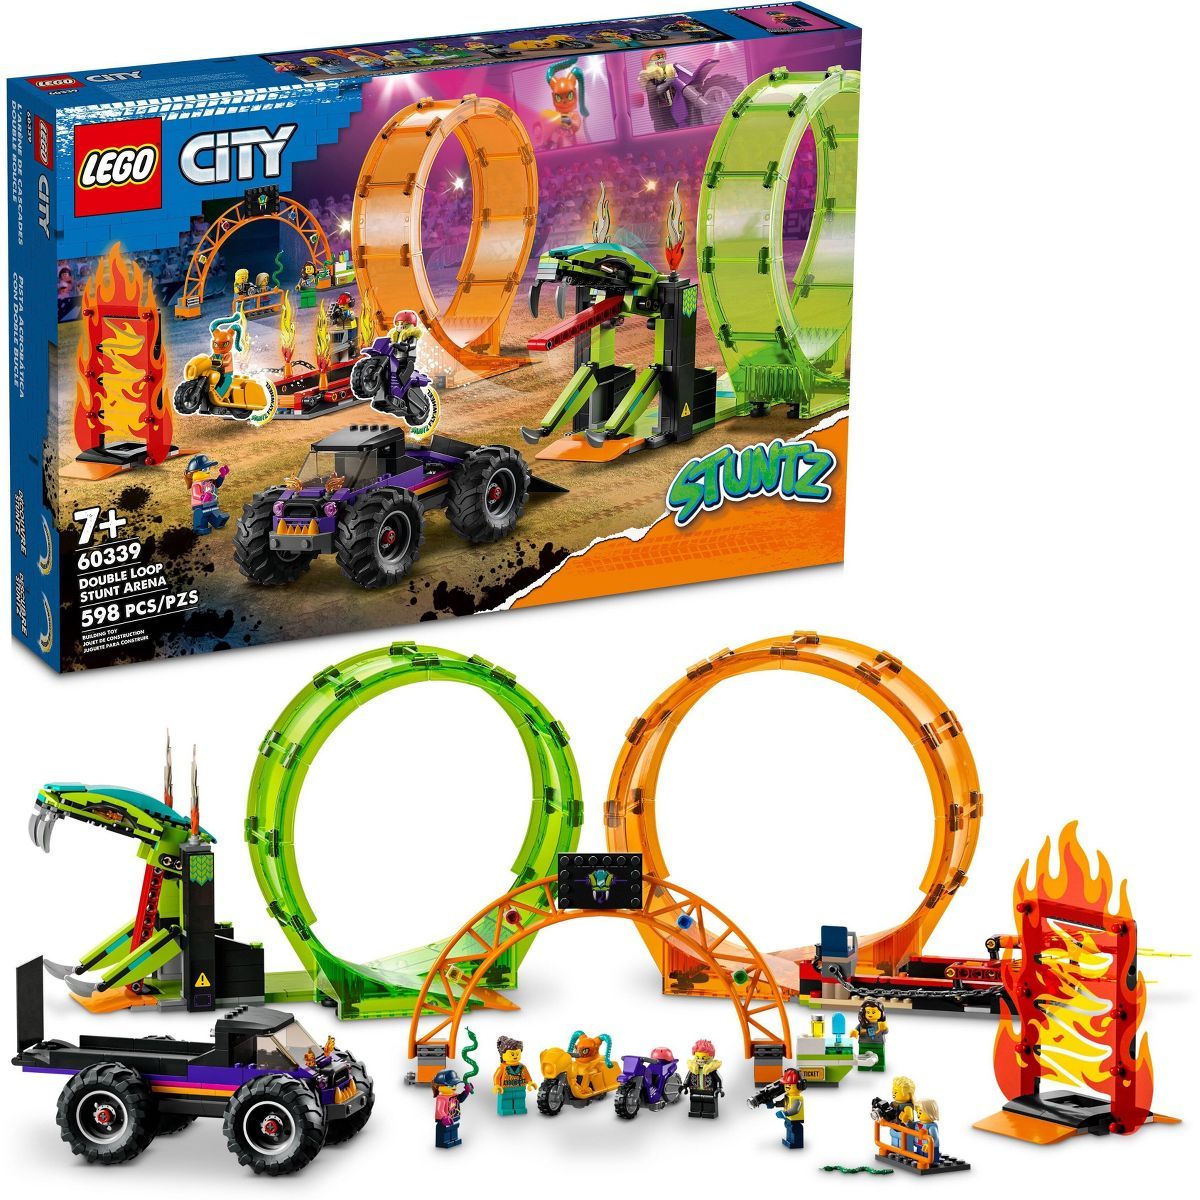 LEGO City Stuntz Double Loop Stunt Arena motorcycle Set 60339 | Target